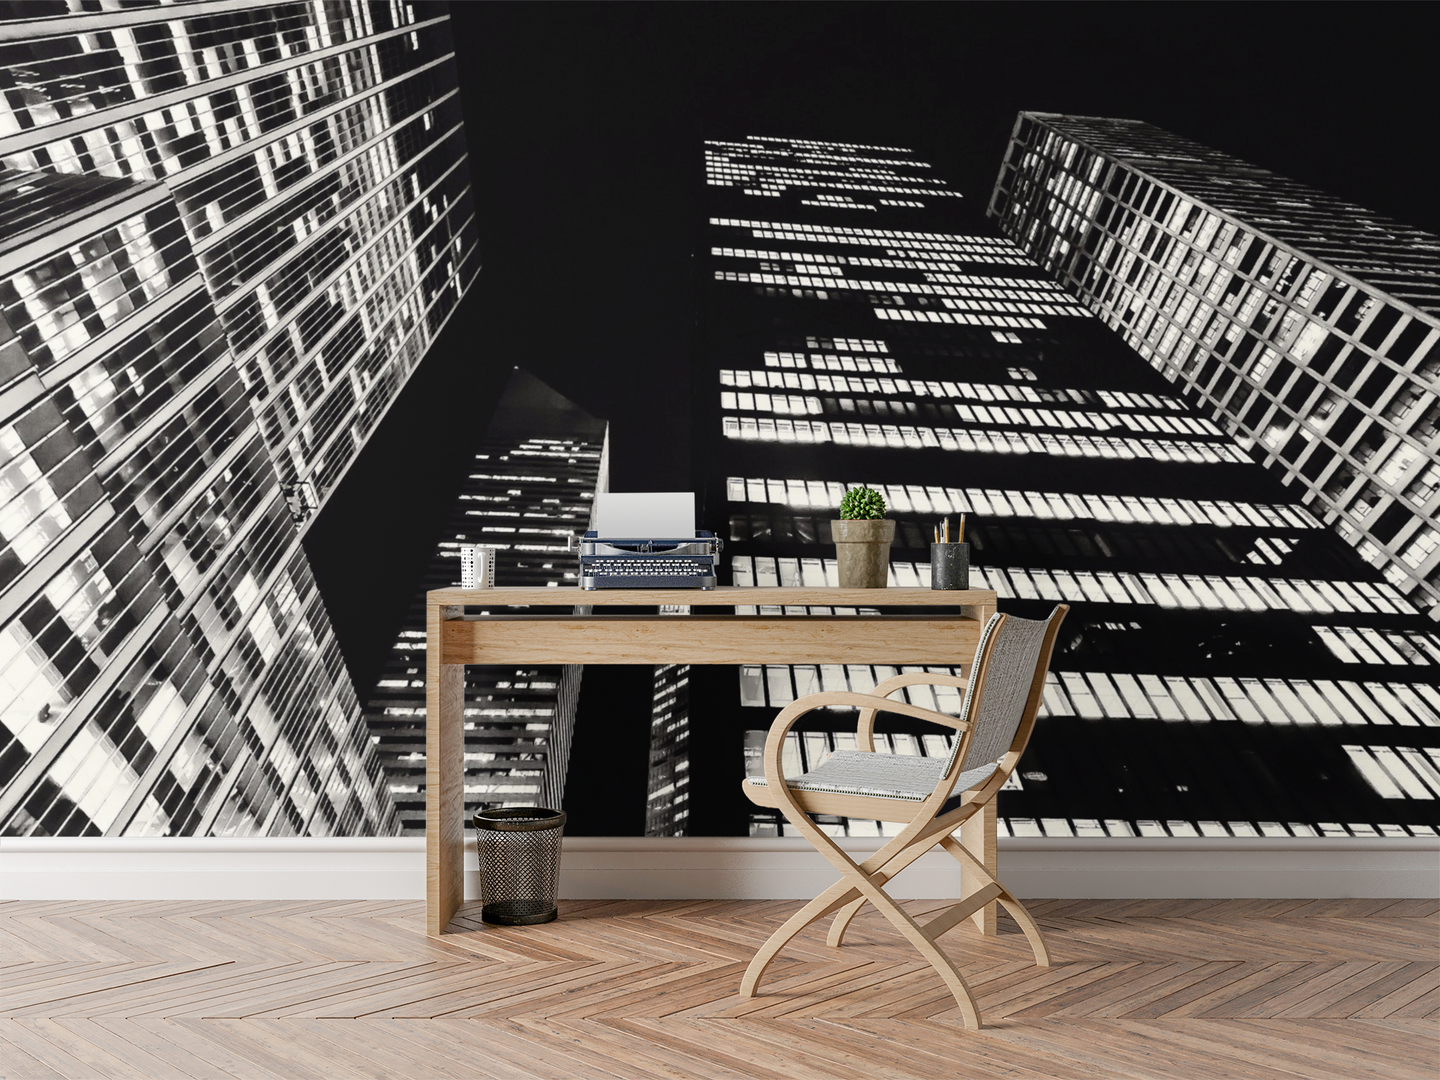 Black & White Building - 0193 - Wall Murals Printing - wall art